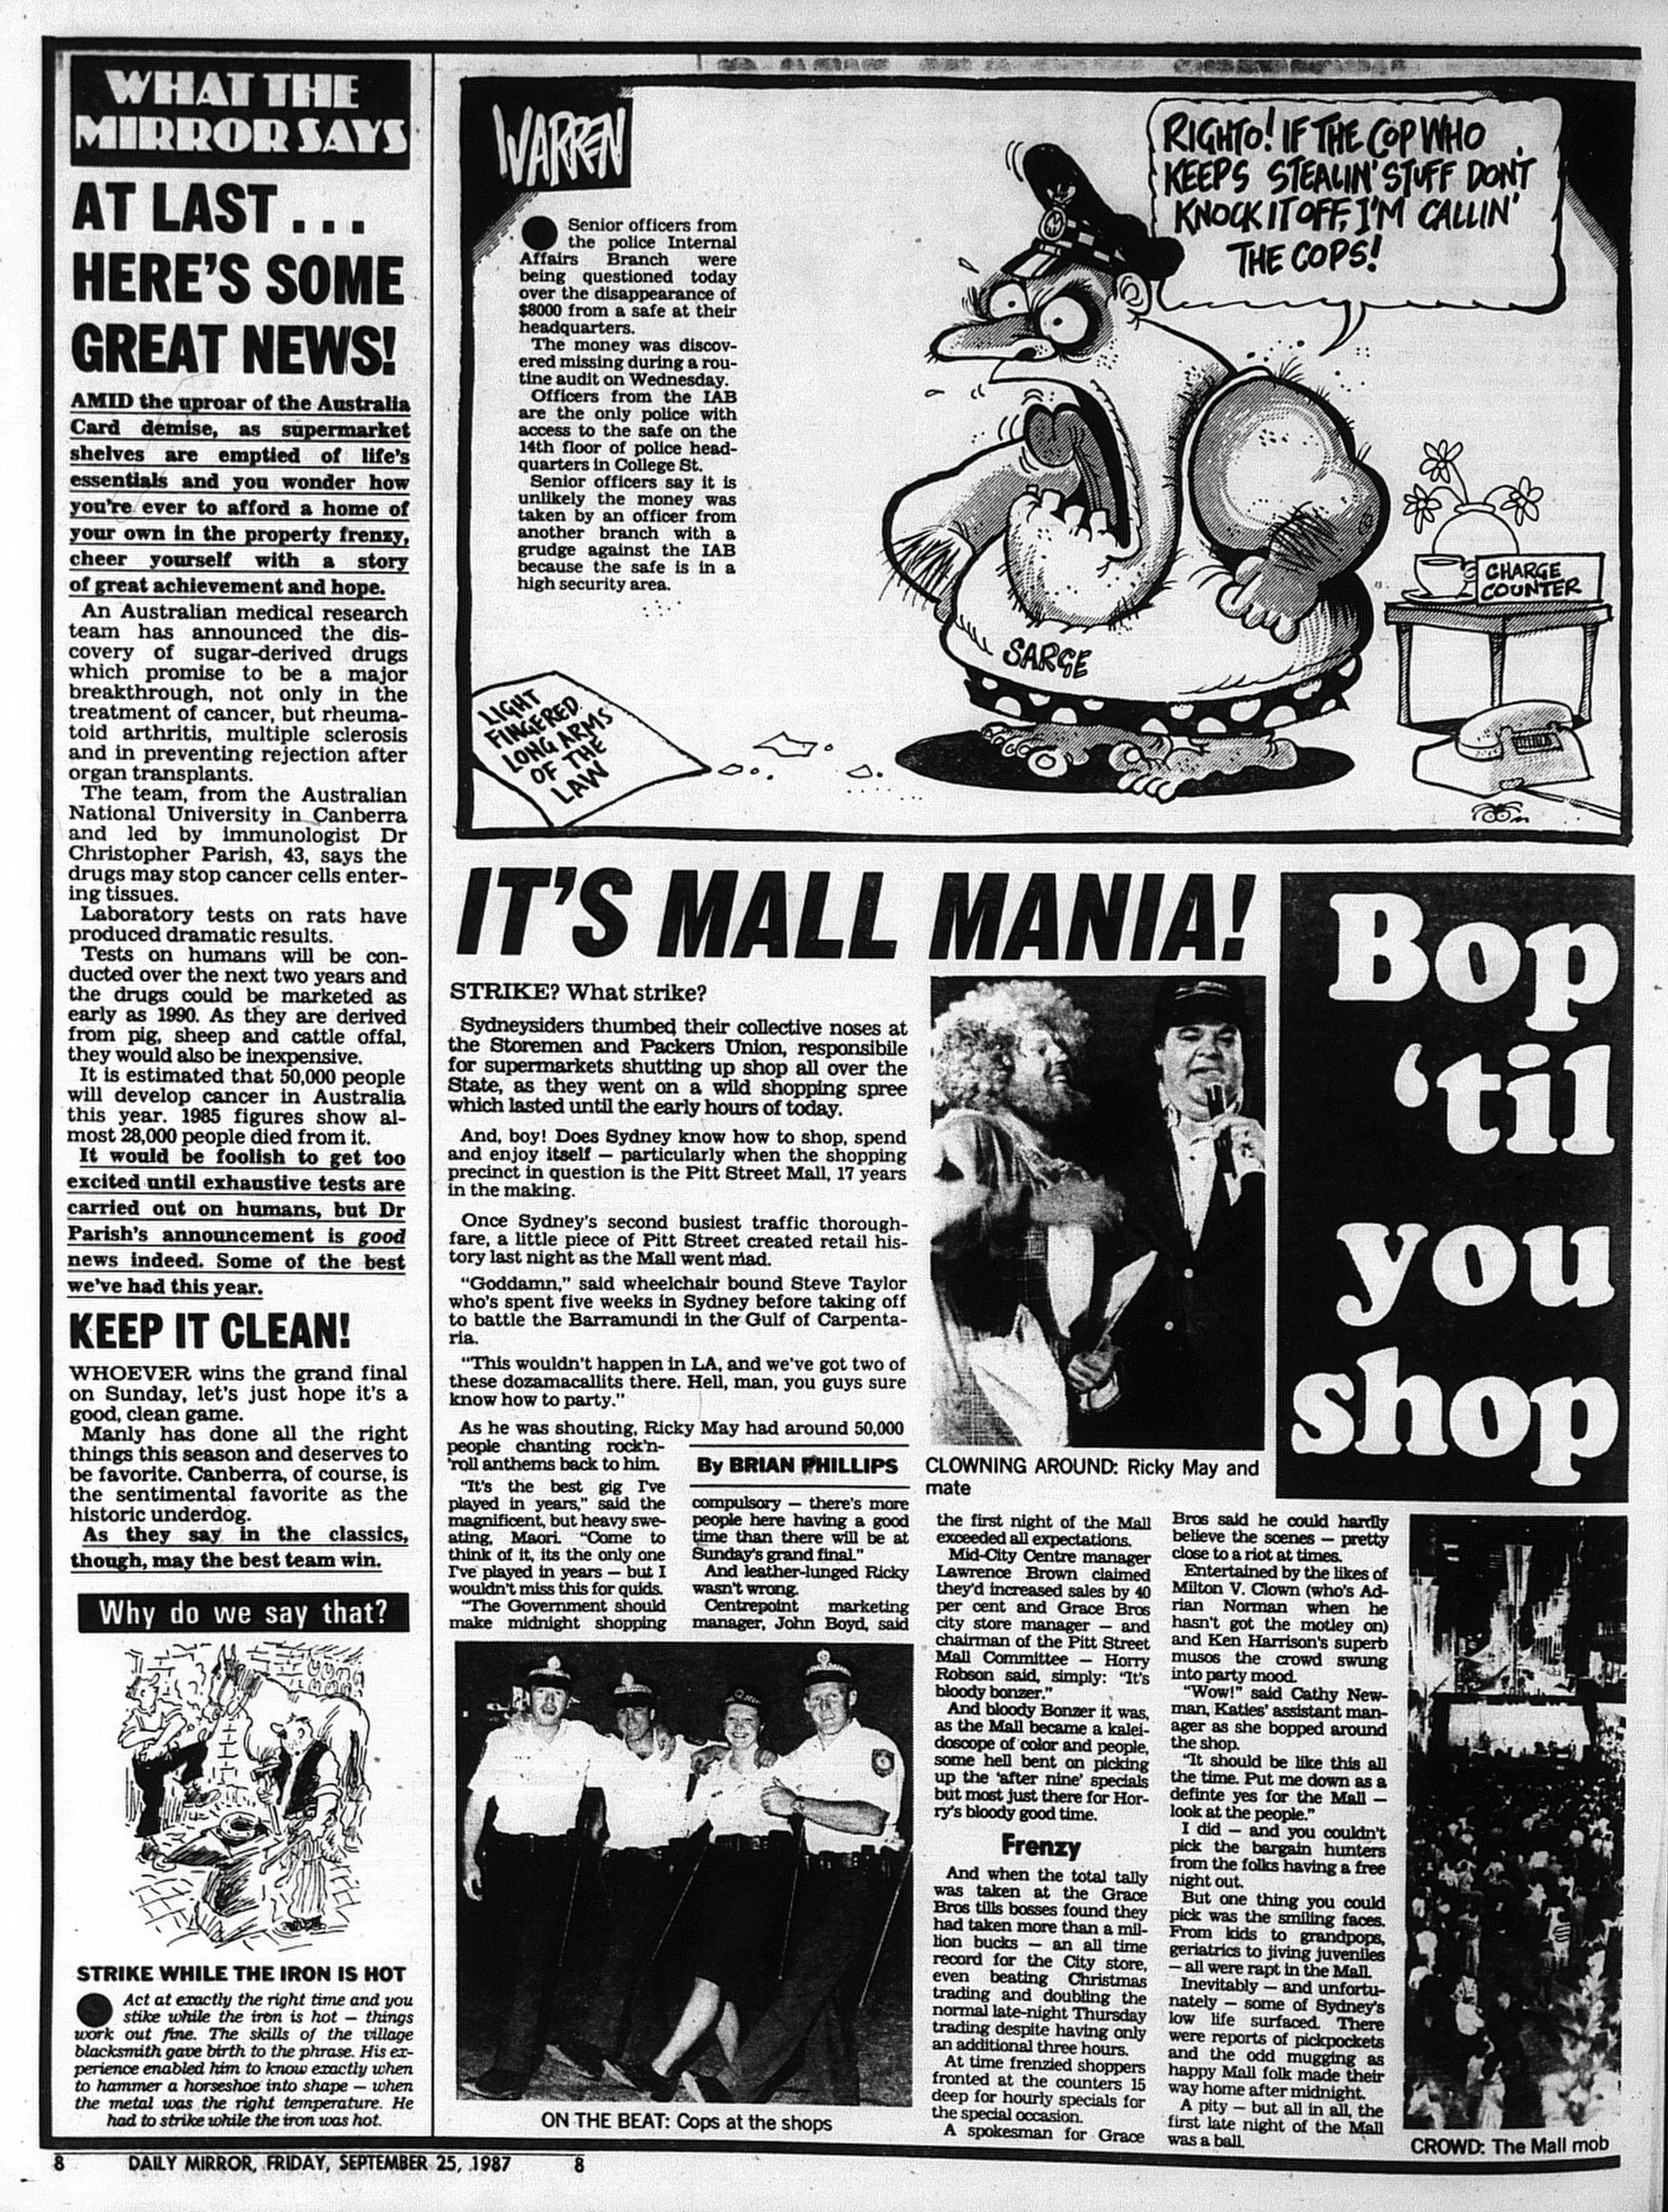 Pitt Street Mall September 25 1987 daily mirror 8